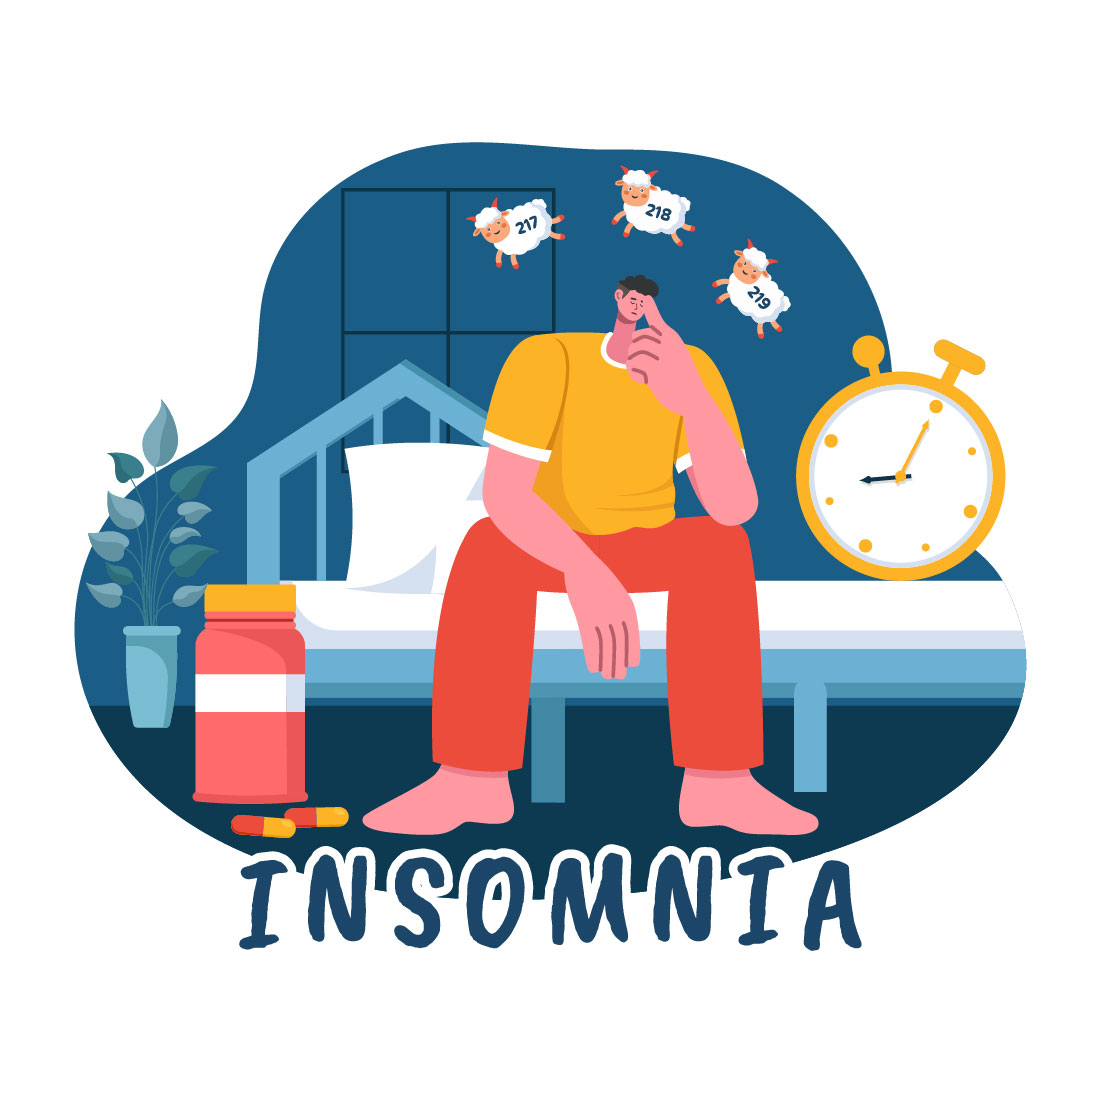 Insomnia Vector Illustration cover image.